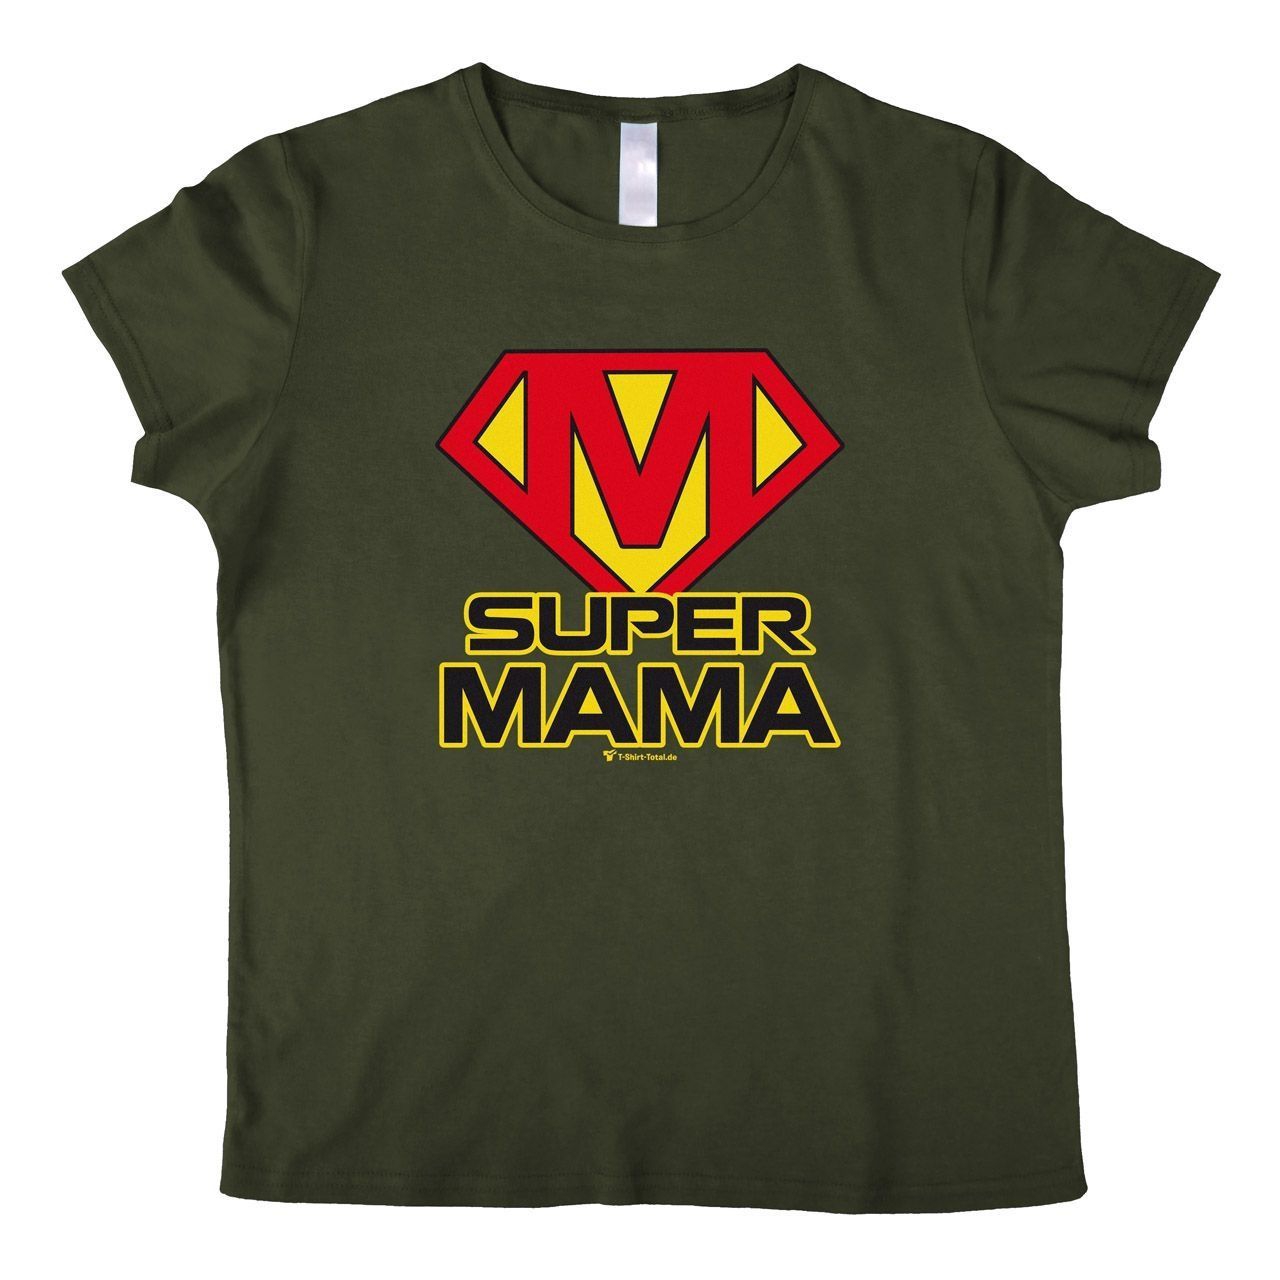 Super Mama Woman T-Shirt khaki 2-Extra Large